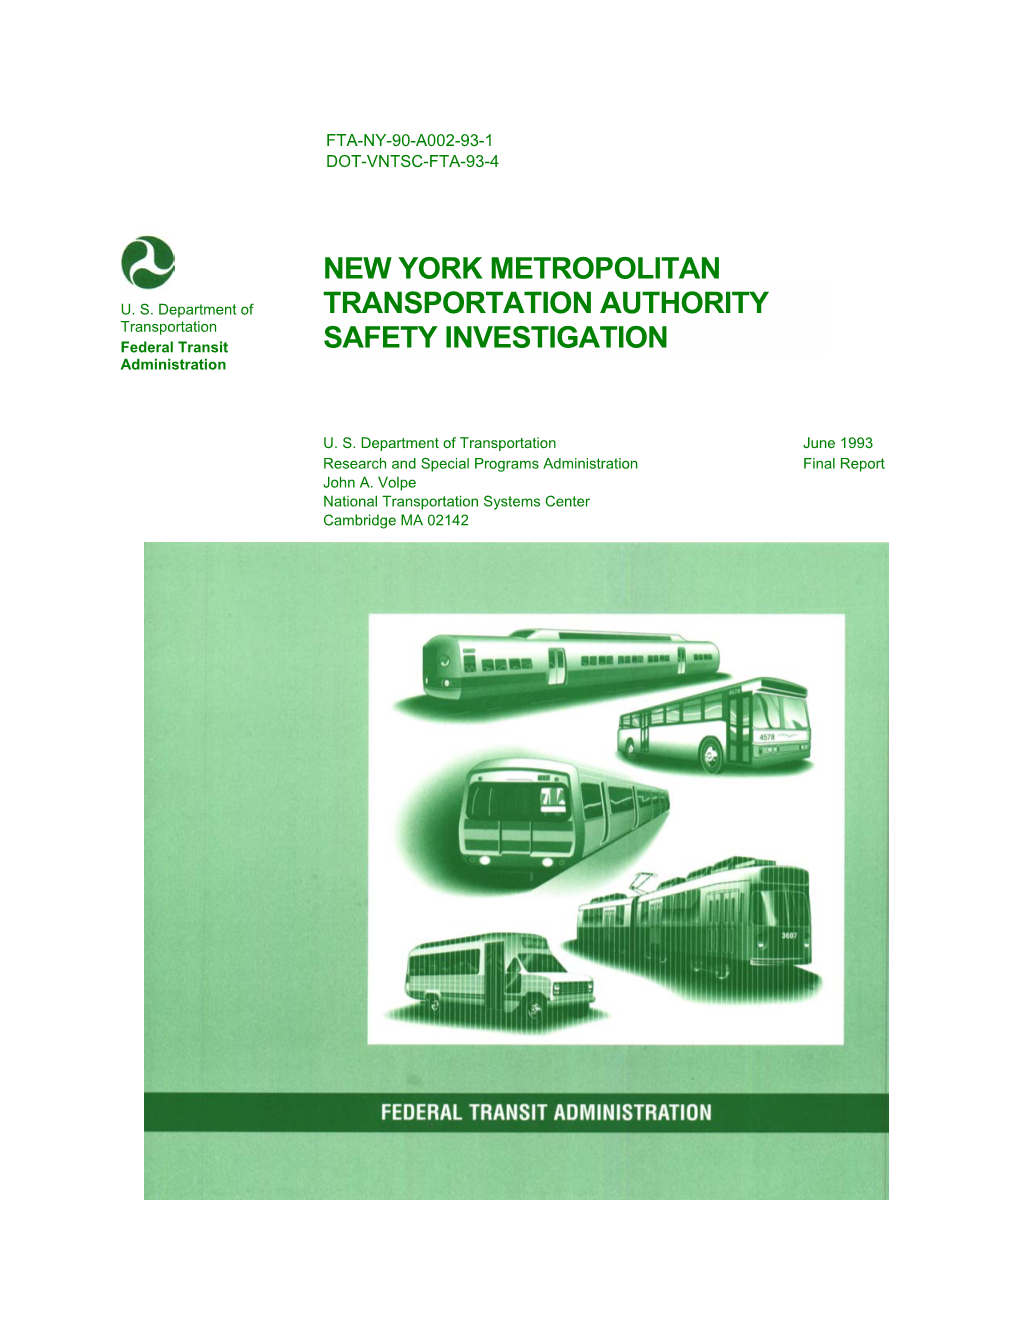 New York Metropolitan Transportation Authority Safety Investigation TB301/U3001 6